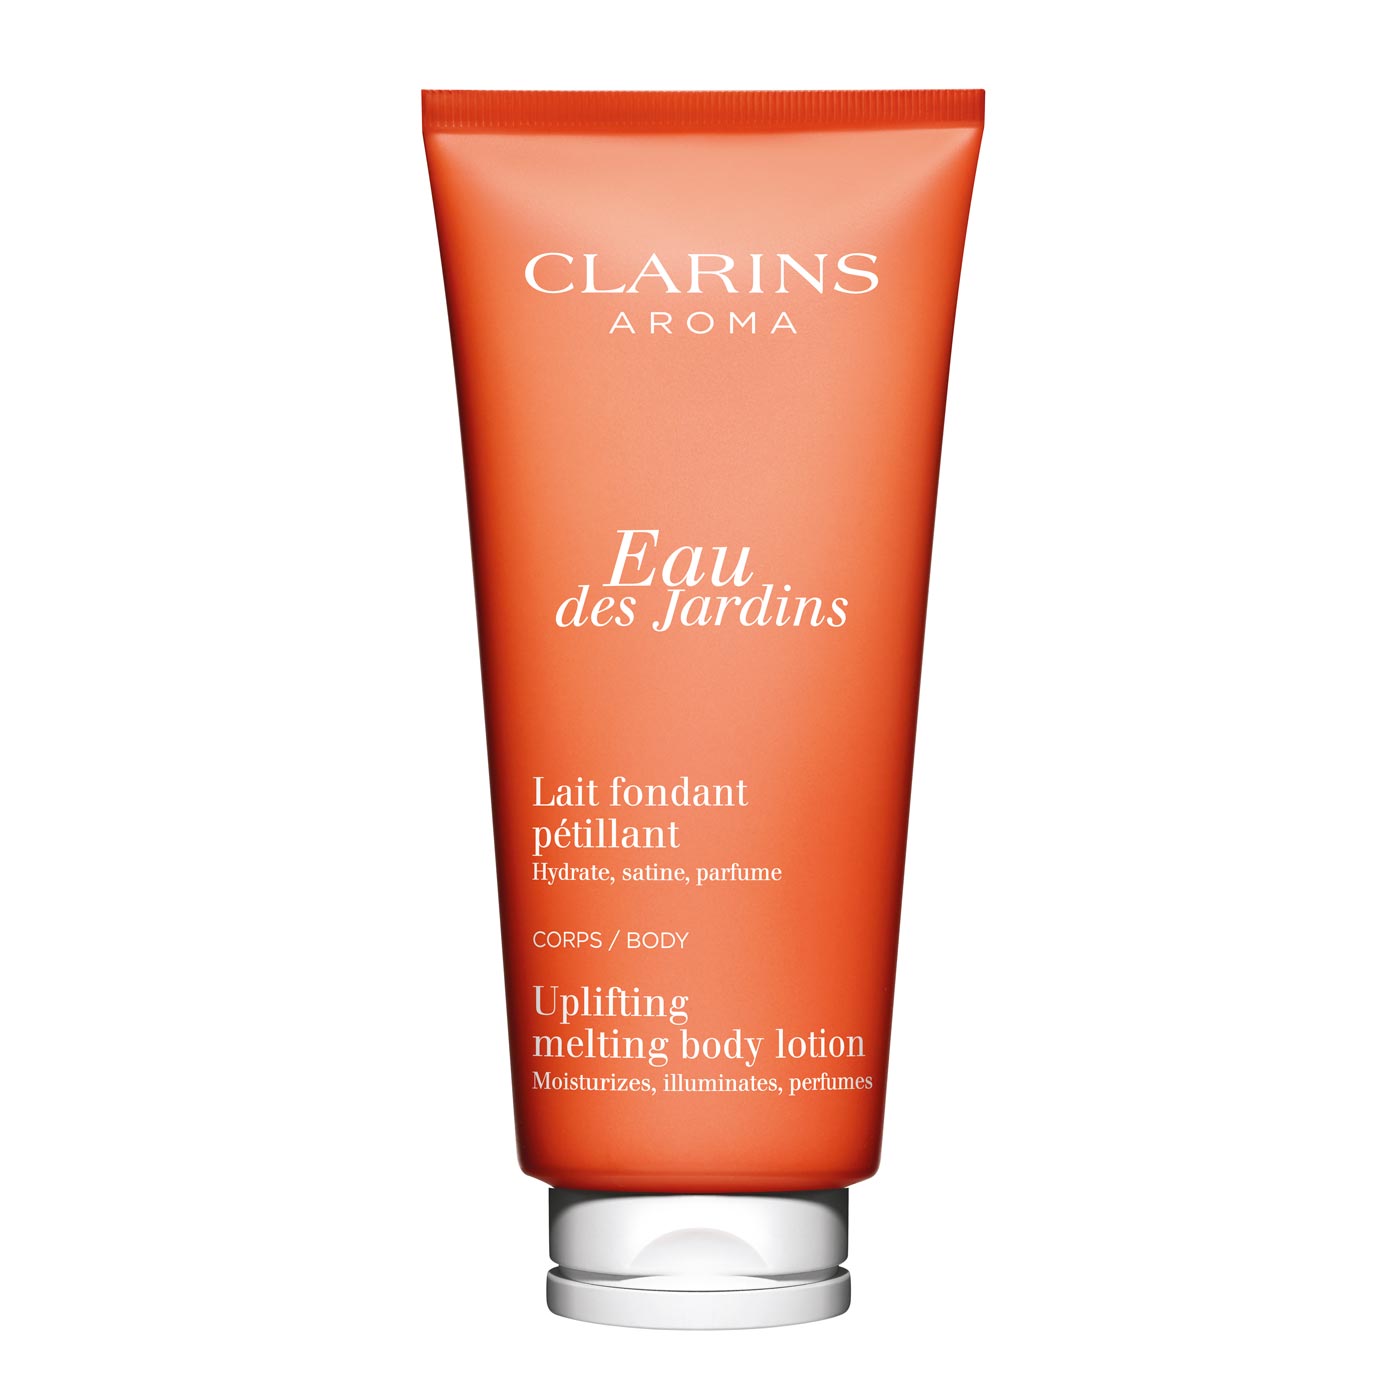 Body Cream - Body Balm & Moisturizing Cream | CLARINS®